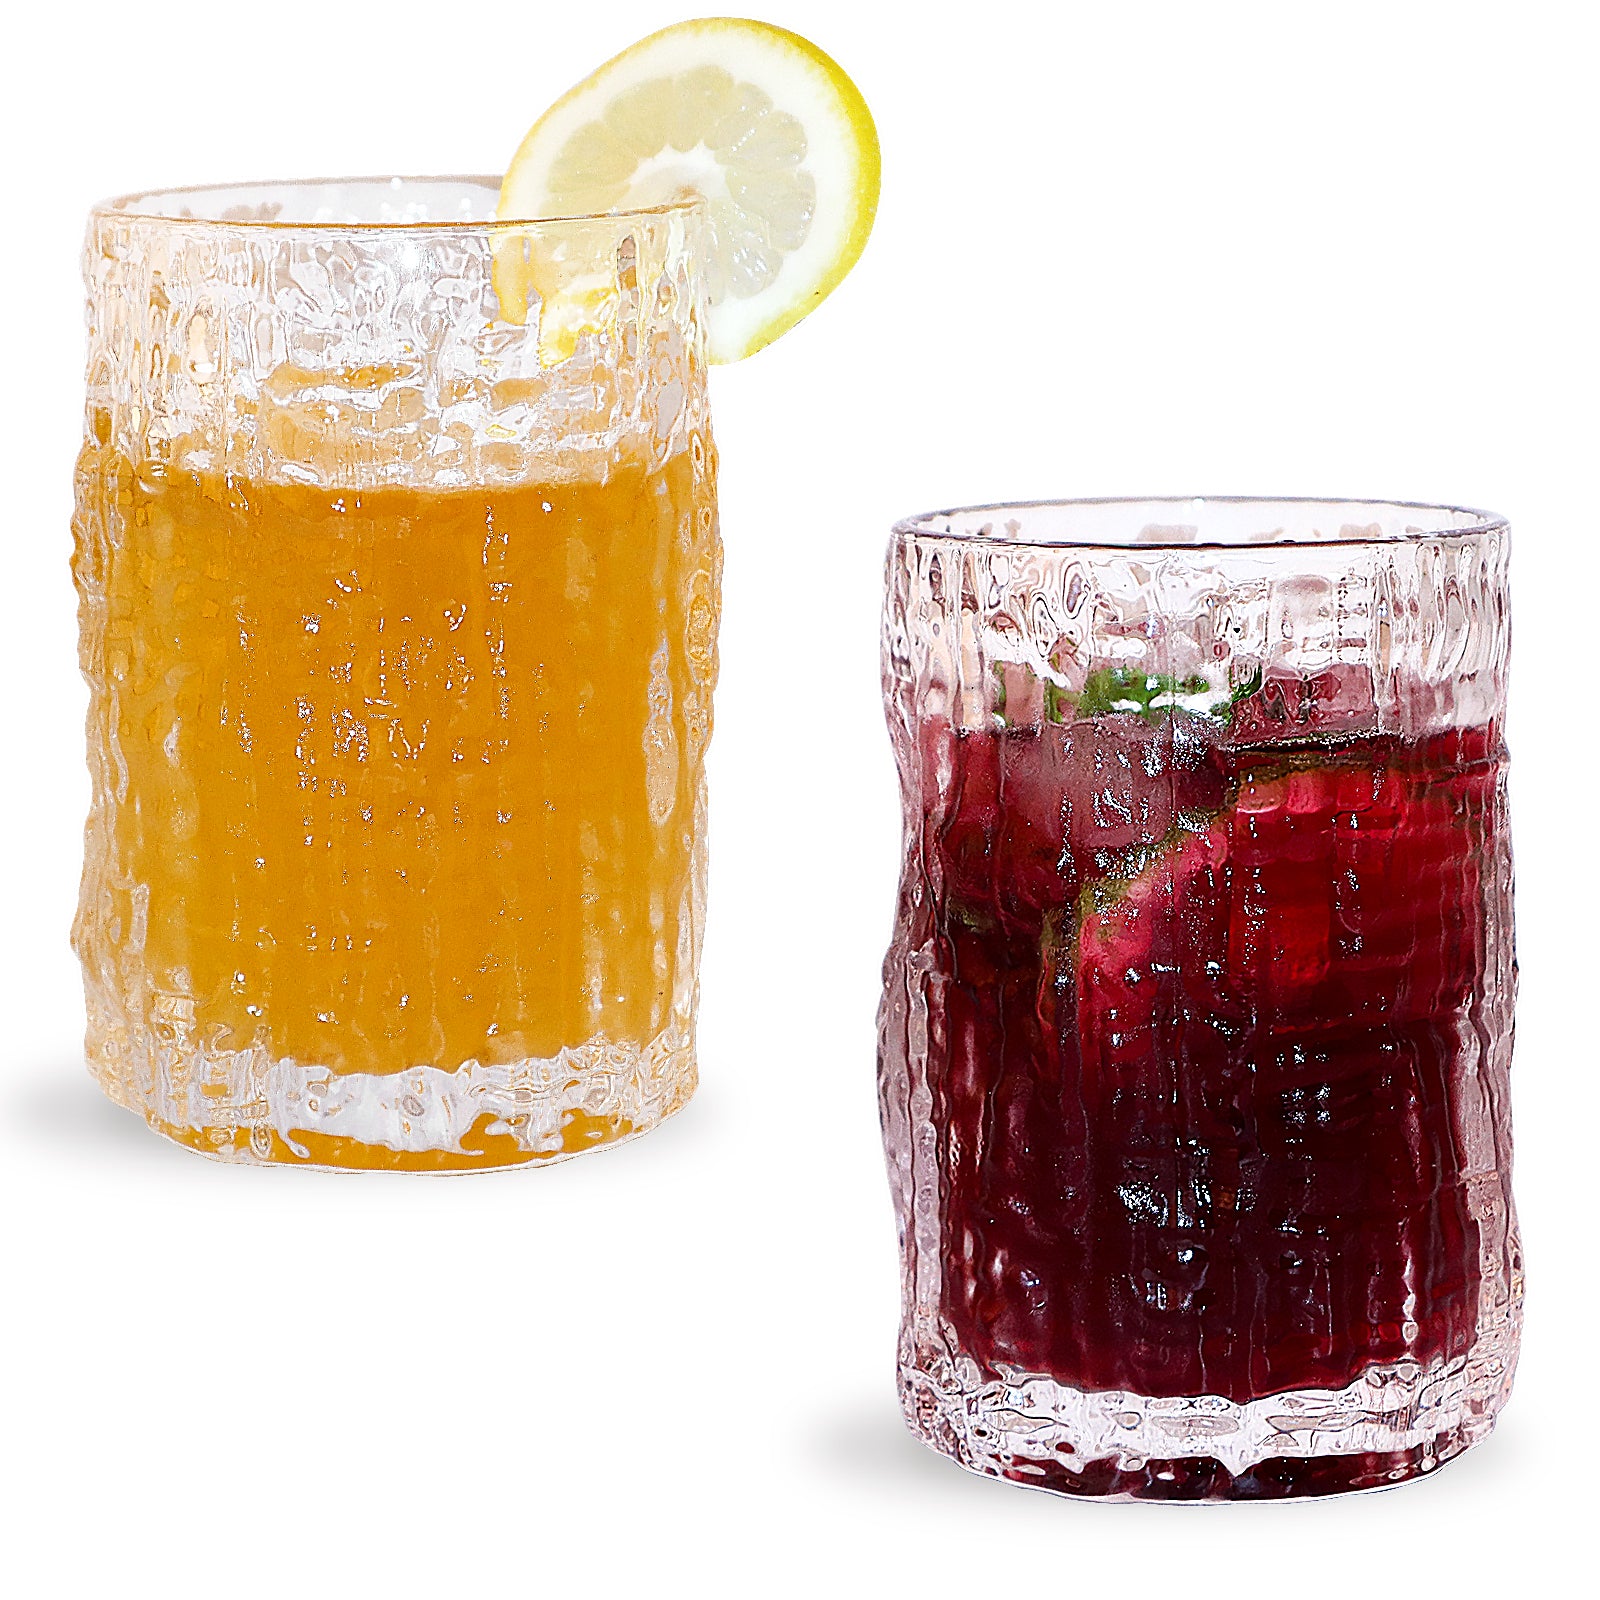 VOBAGA Delicate Water Glasses Set of 2, Clear Vintage Glassware for Juice , Elegant Iced Beverage Glass Cups